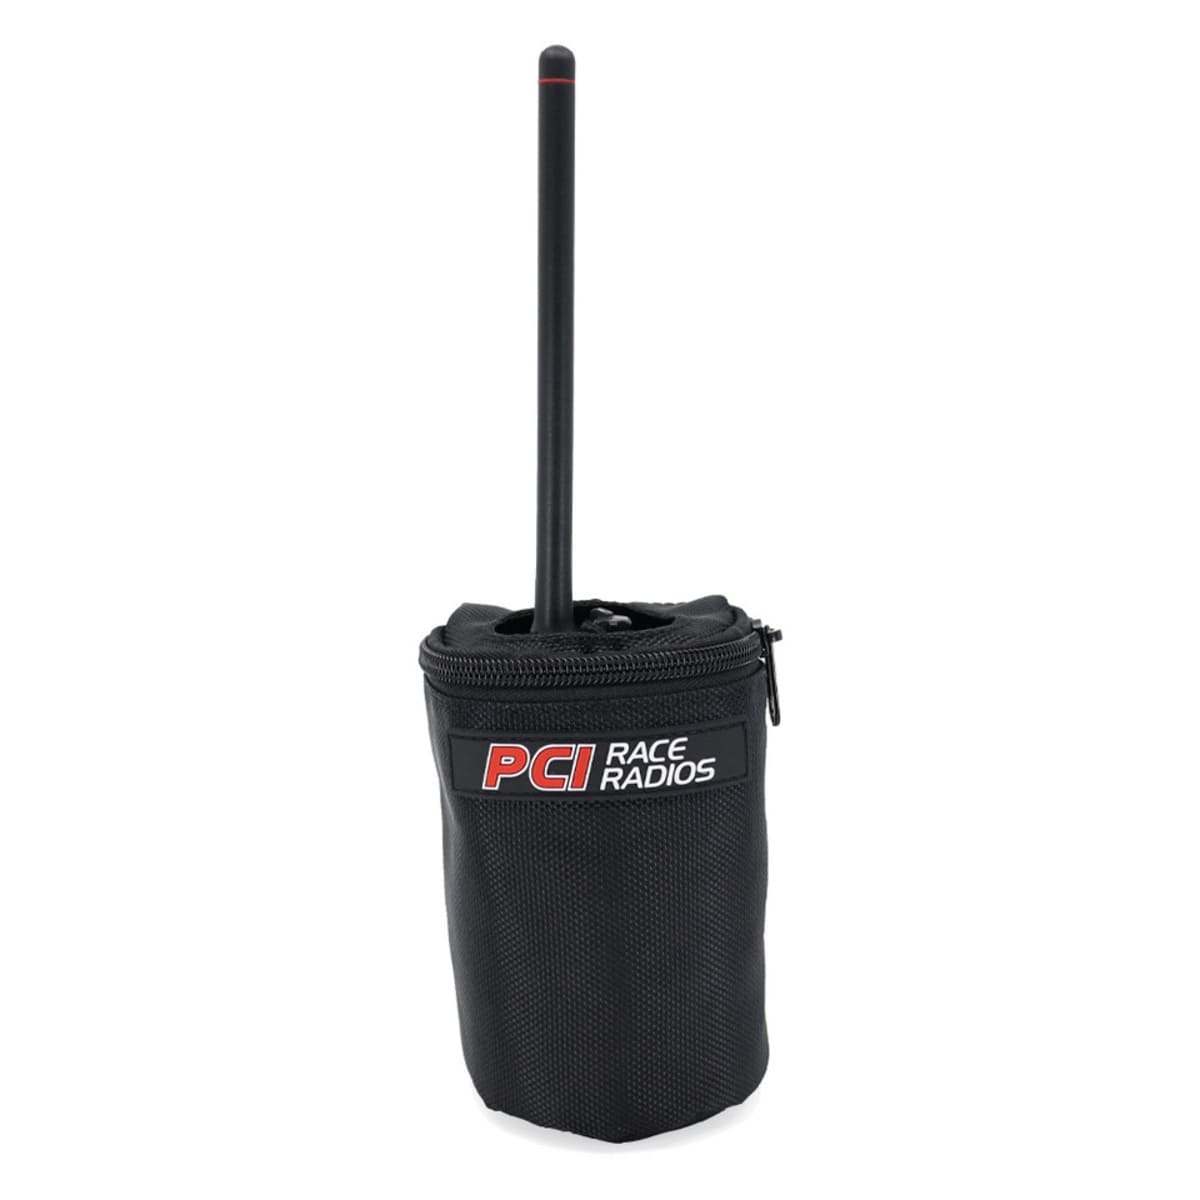 PCI Race Radios Handheld Radio Bag